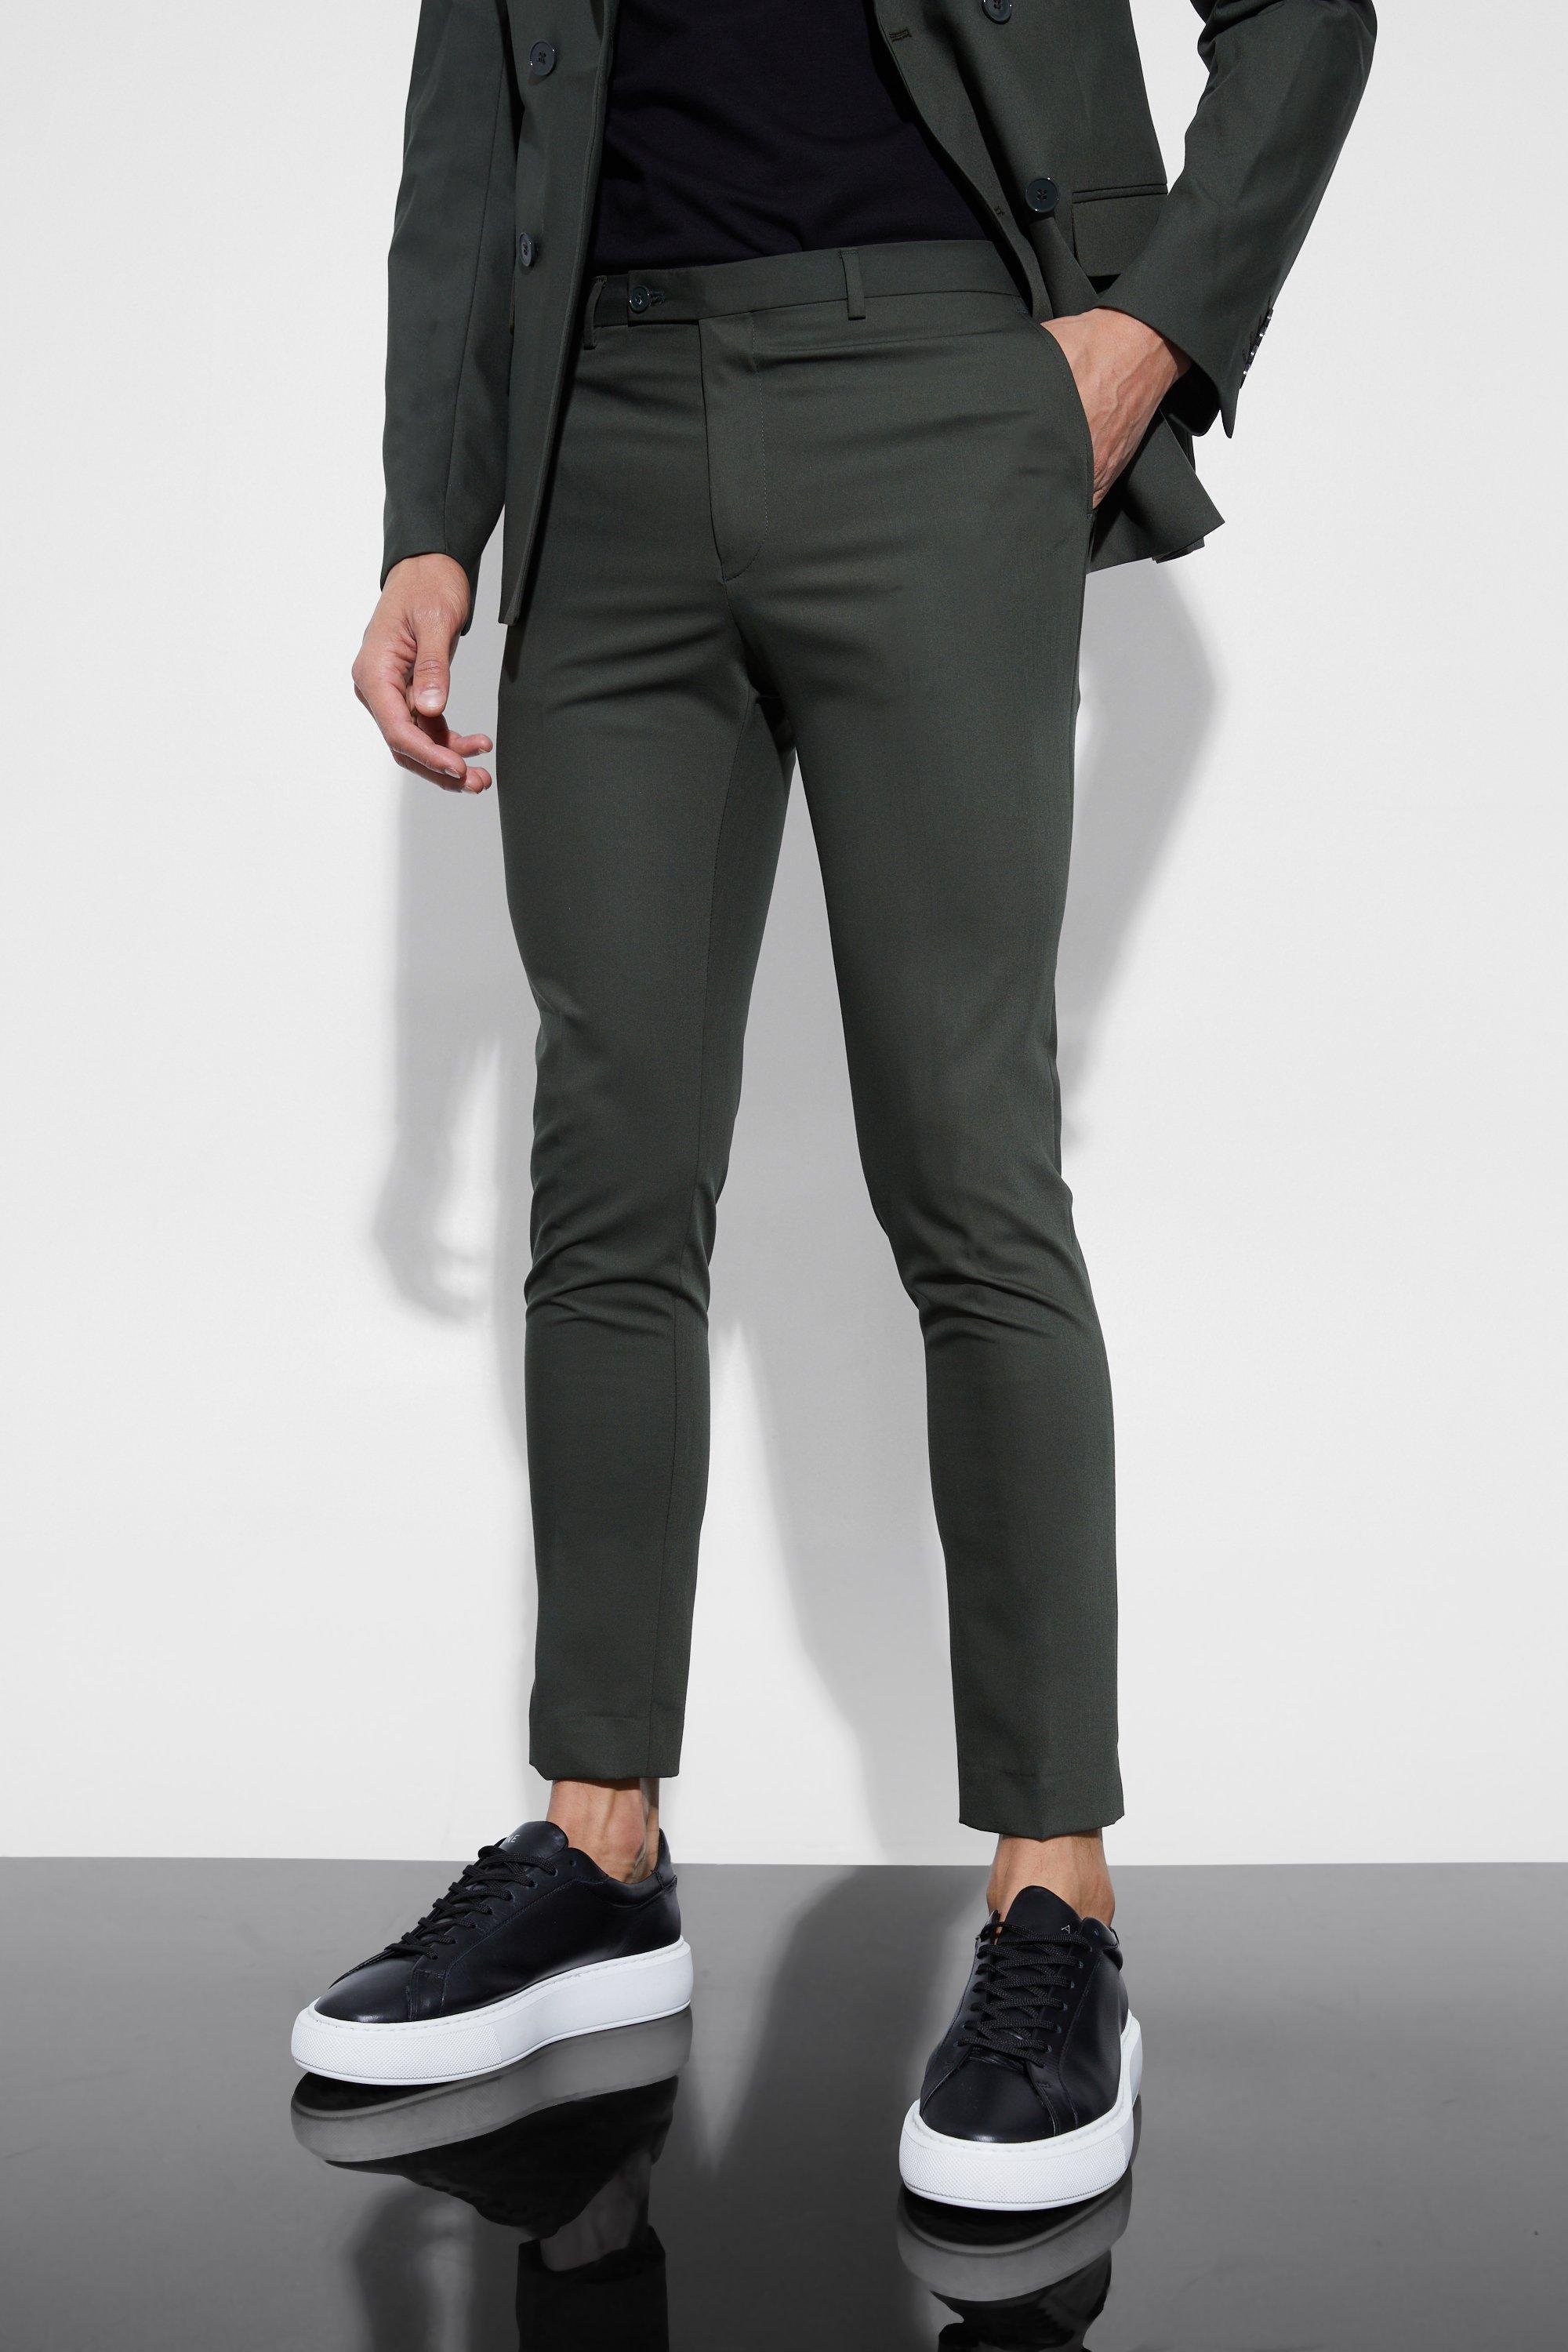 ASOS DESIGN Super Skinny Suit Trousers In Black And Green Windowpane Check,  $30 | Asos | Lookastic